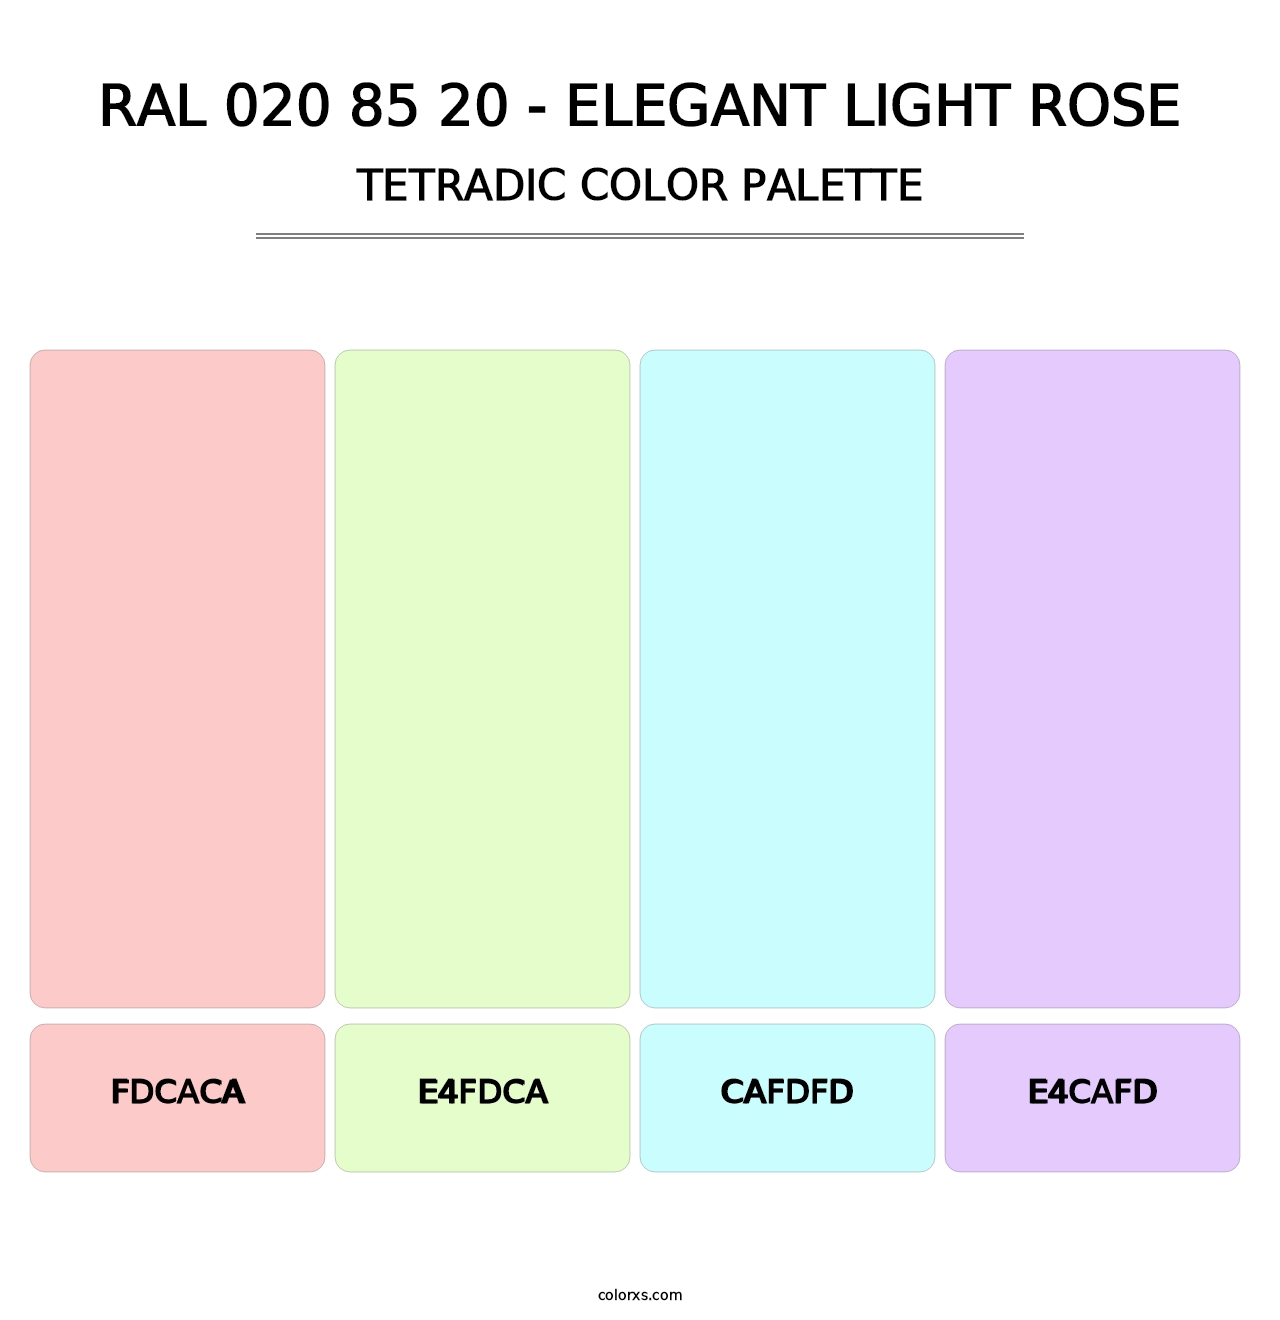 RAL 020 85 20 - Elegant Light Rose - Tetradic Color Palette